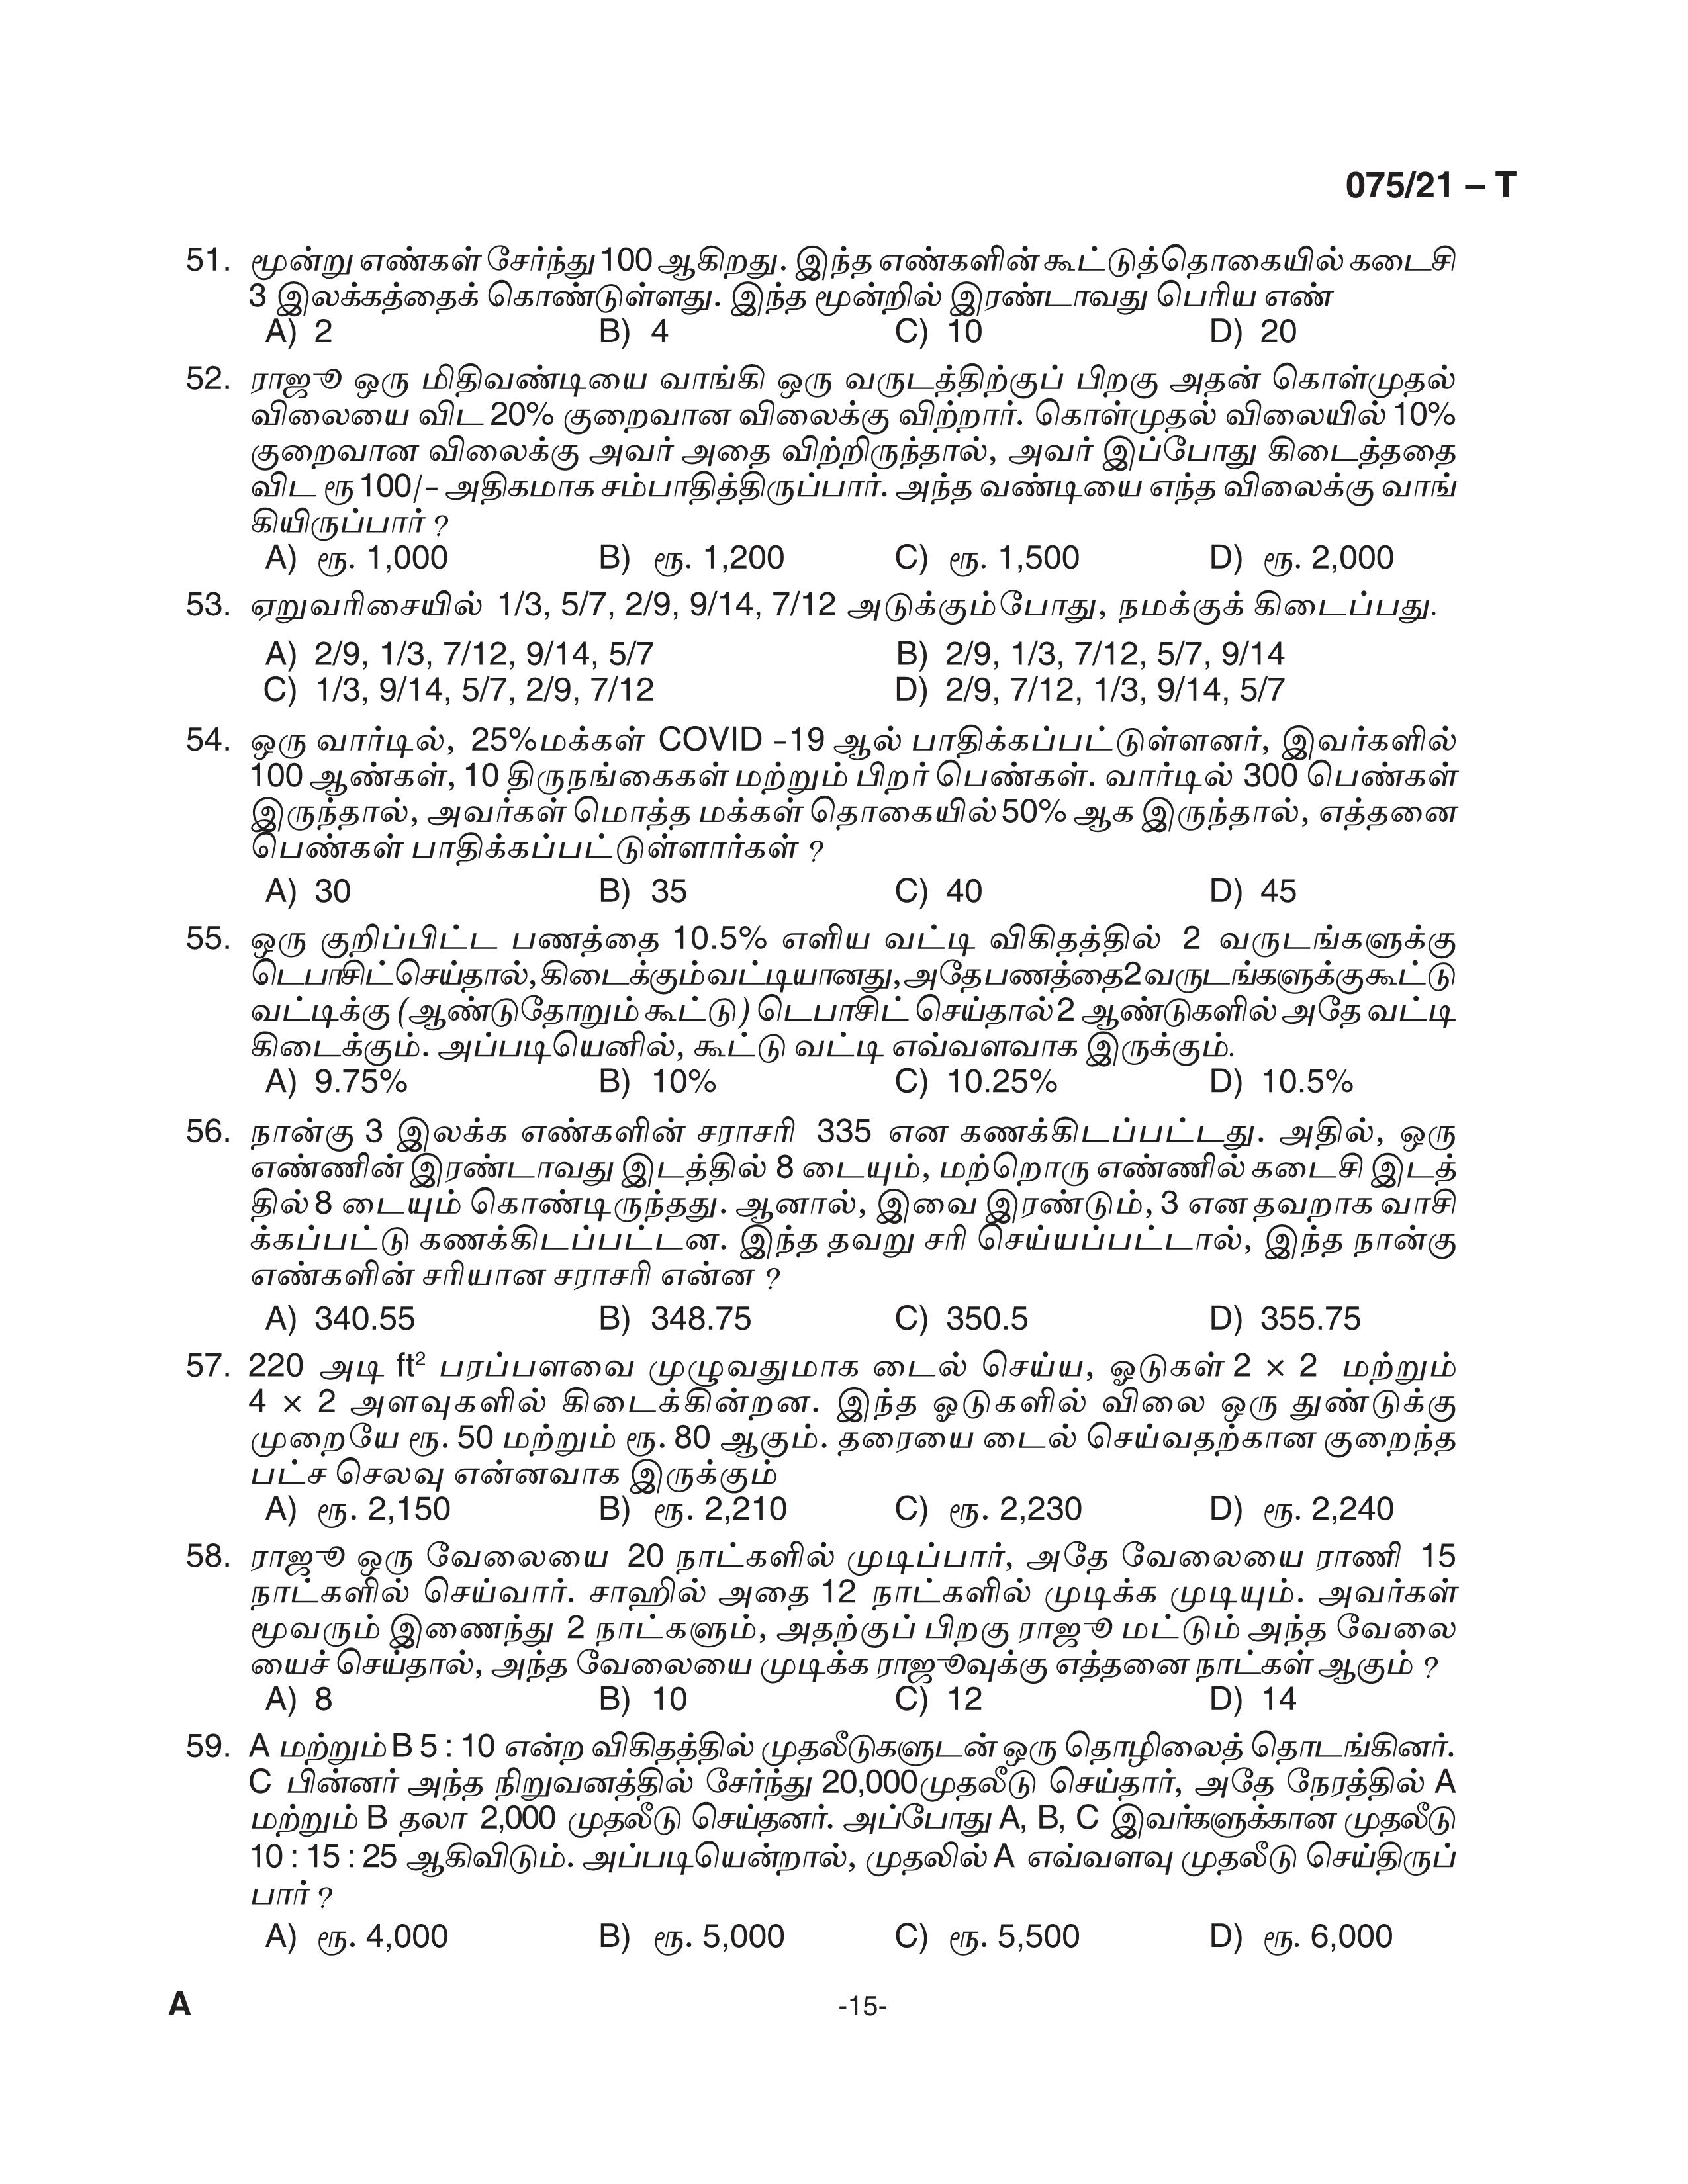 KPSC Degree Level Preliminary Exam Stage I Tamil 2021 Code 07521 T 15